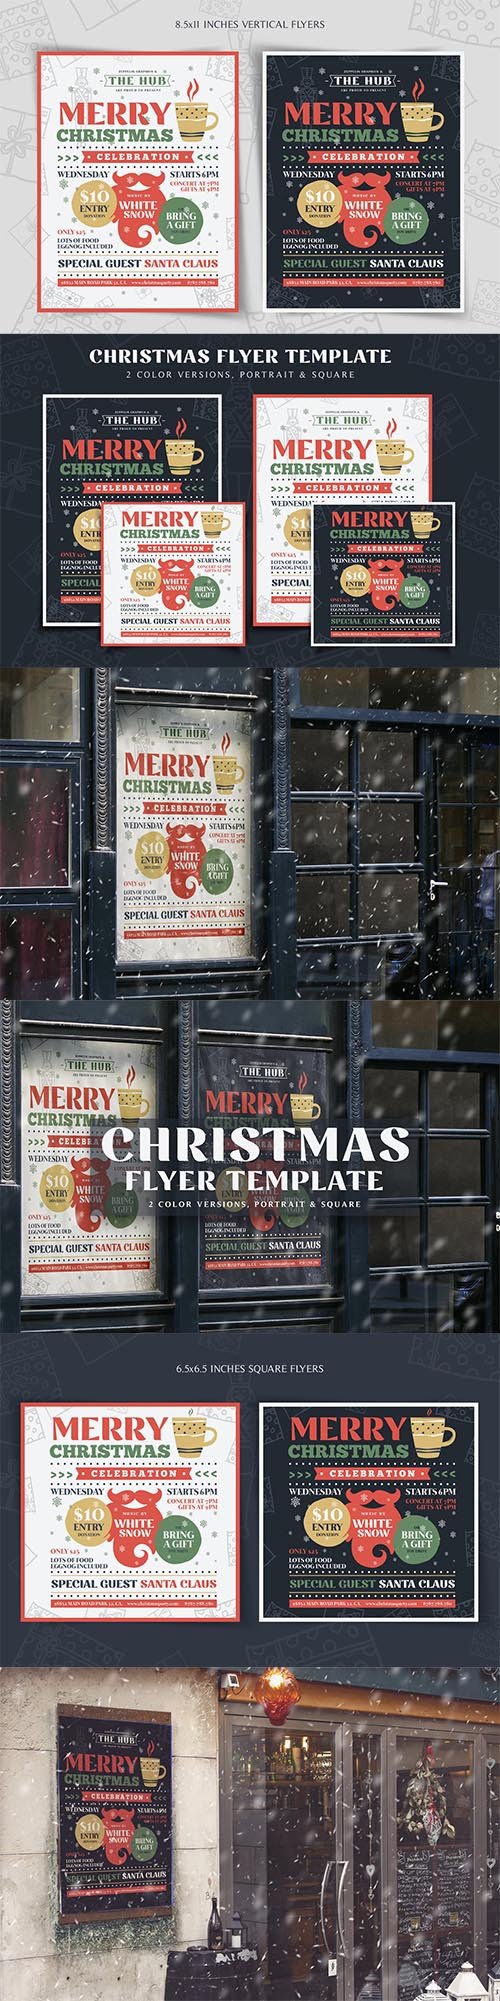 Christmas Flyer Template Vol.1